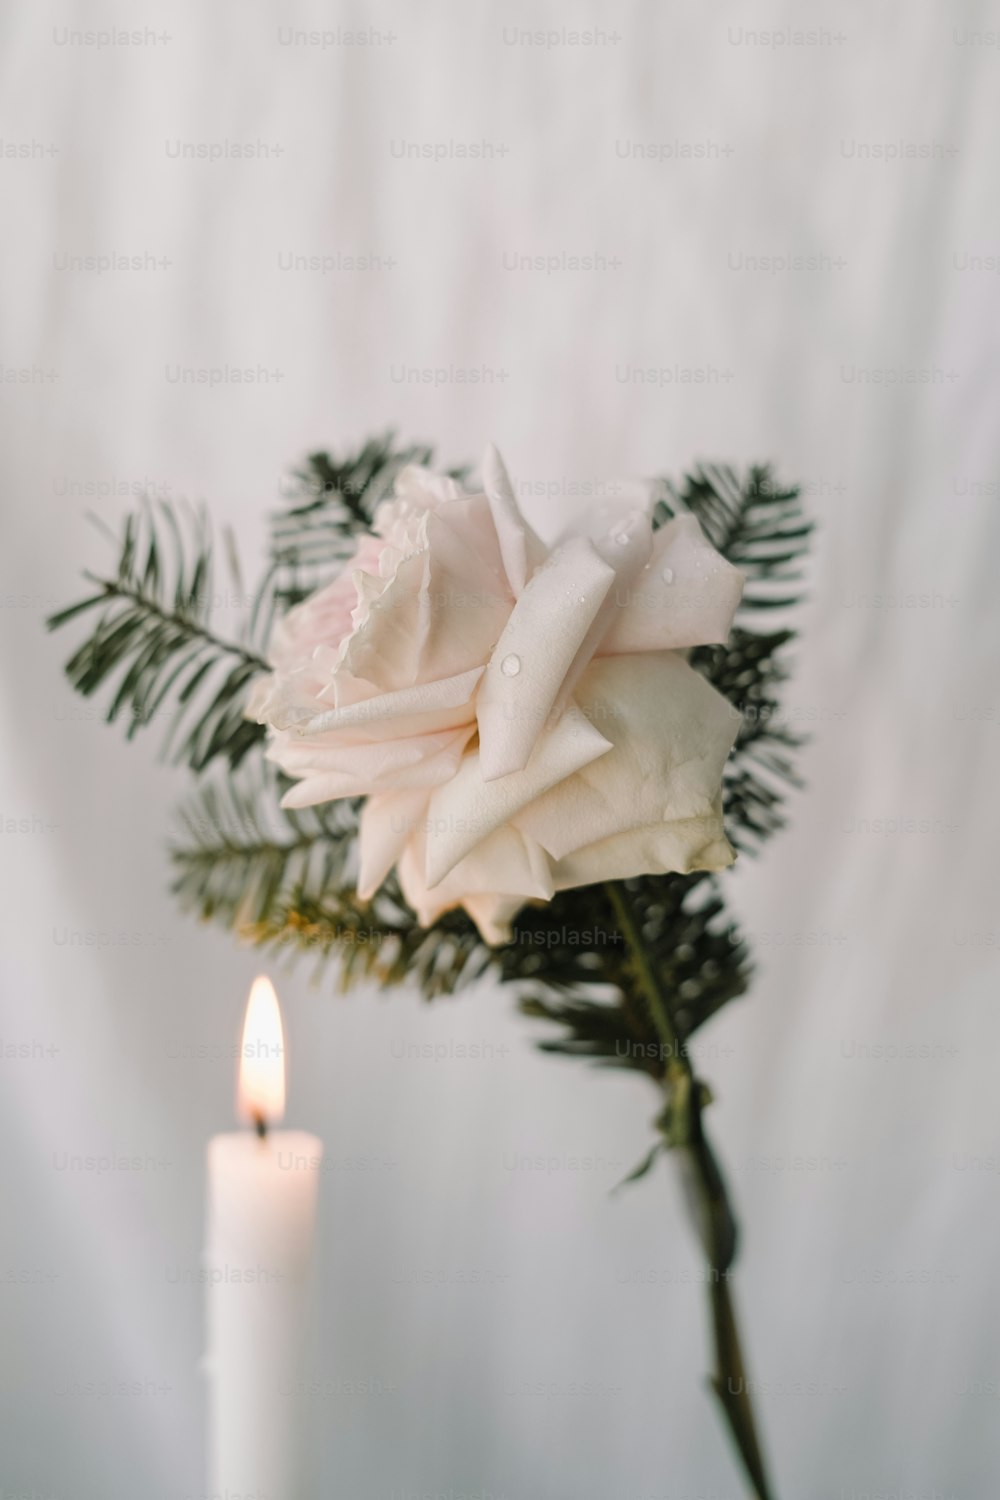 Una sola rosa blanca sentada junto a una vela encendida